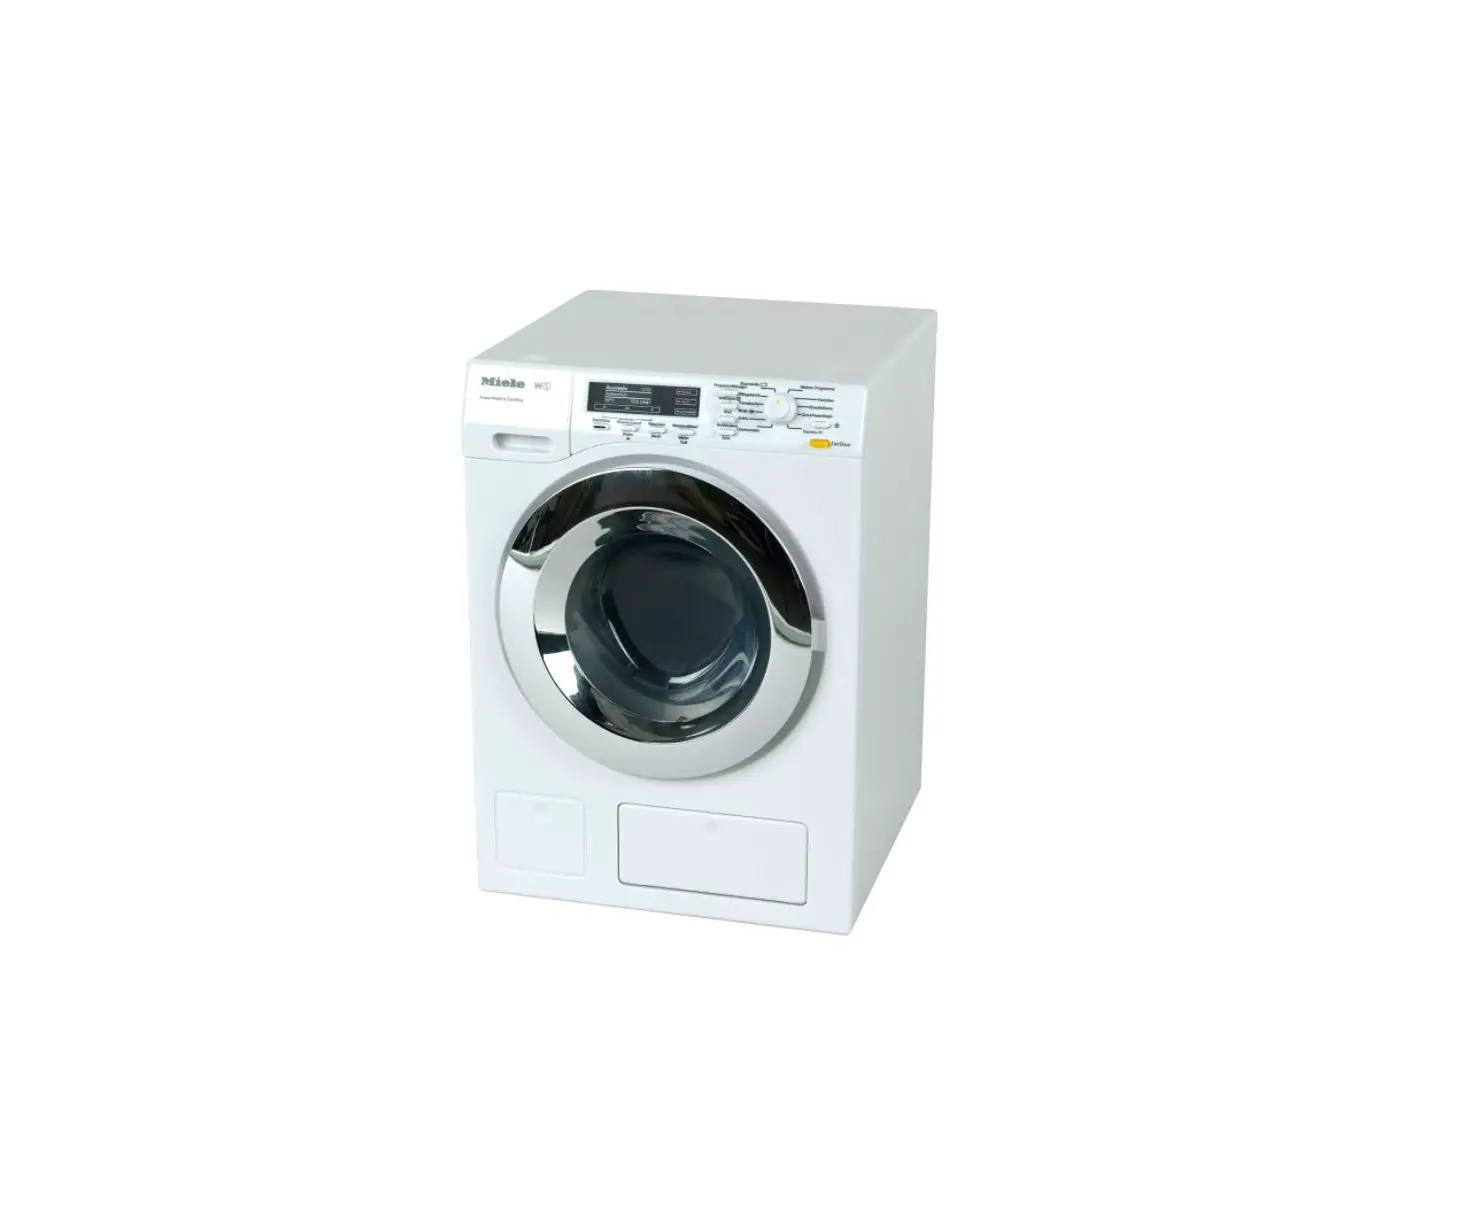 Miele Washing machine User Manual - Manualsnap